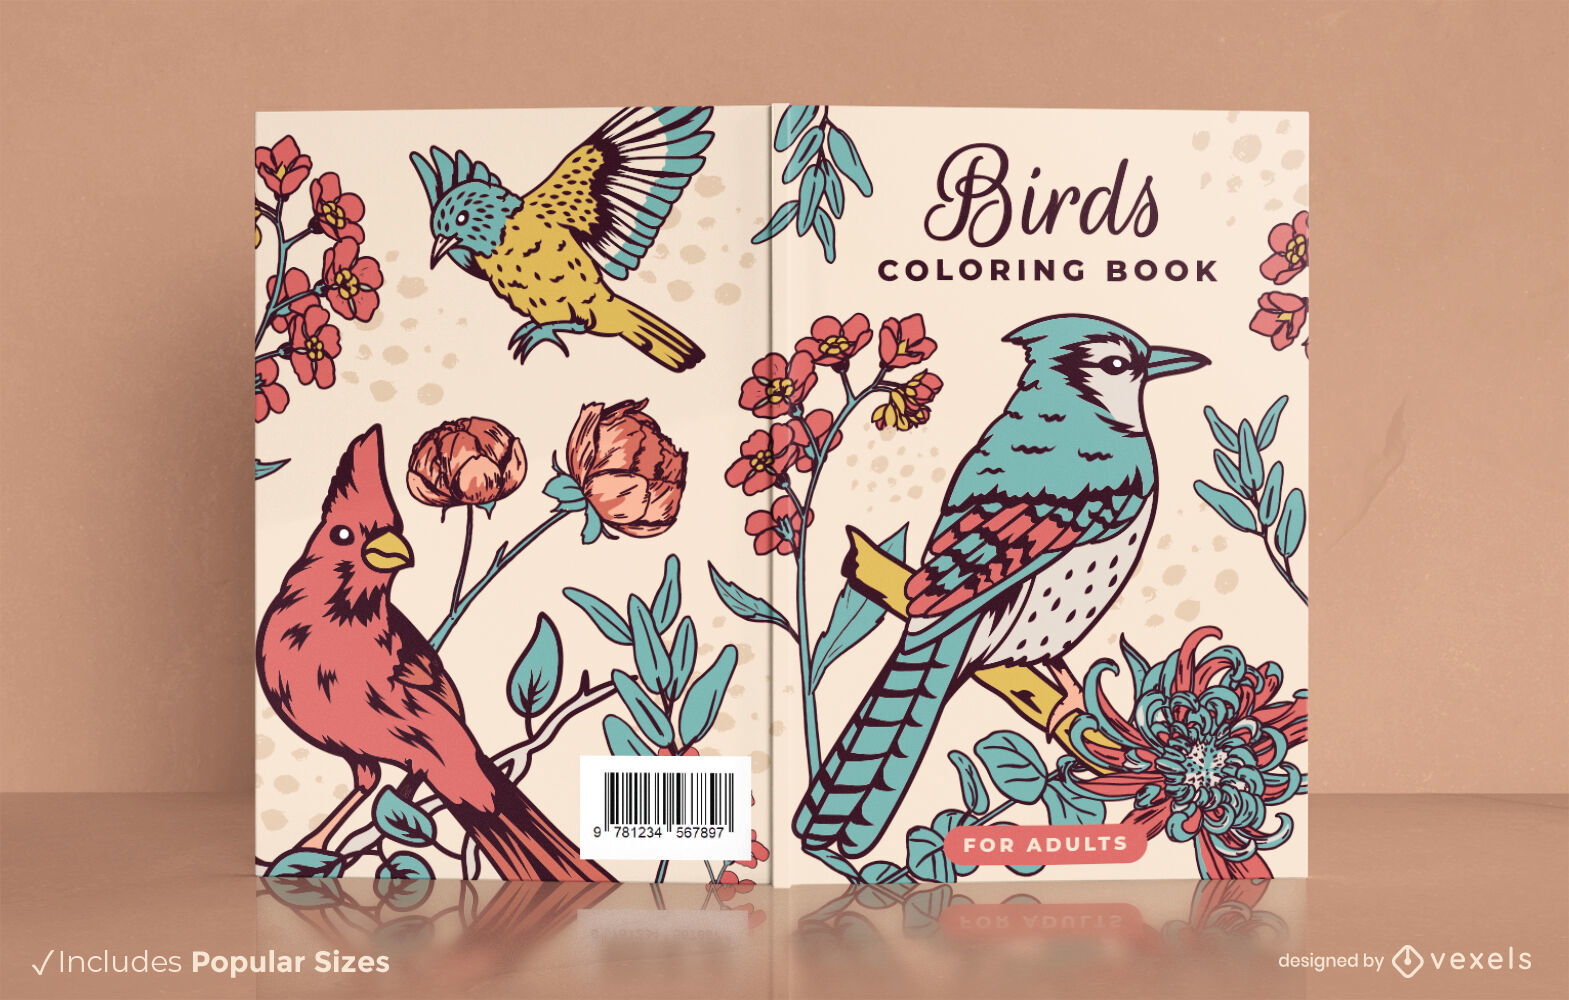 Beautiful birds coloring book cover design